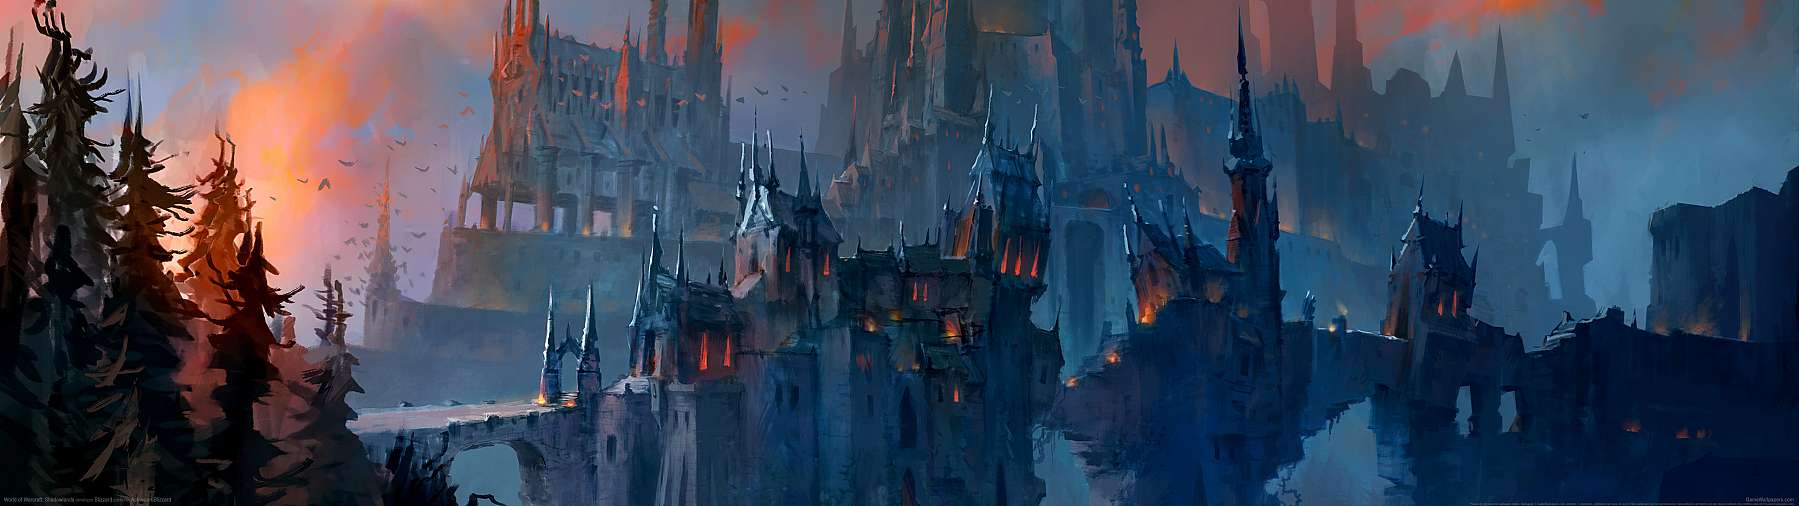 World of Warcraft: Shadowlands superwide wallpaper or background 04